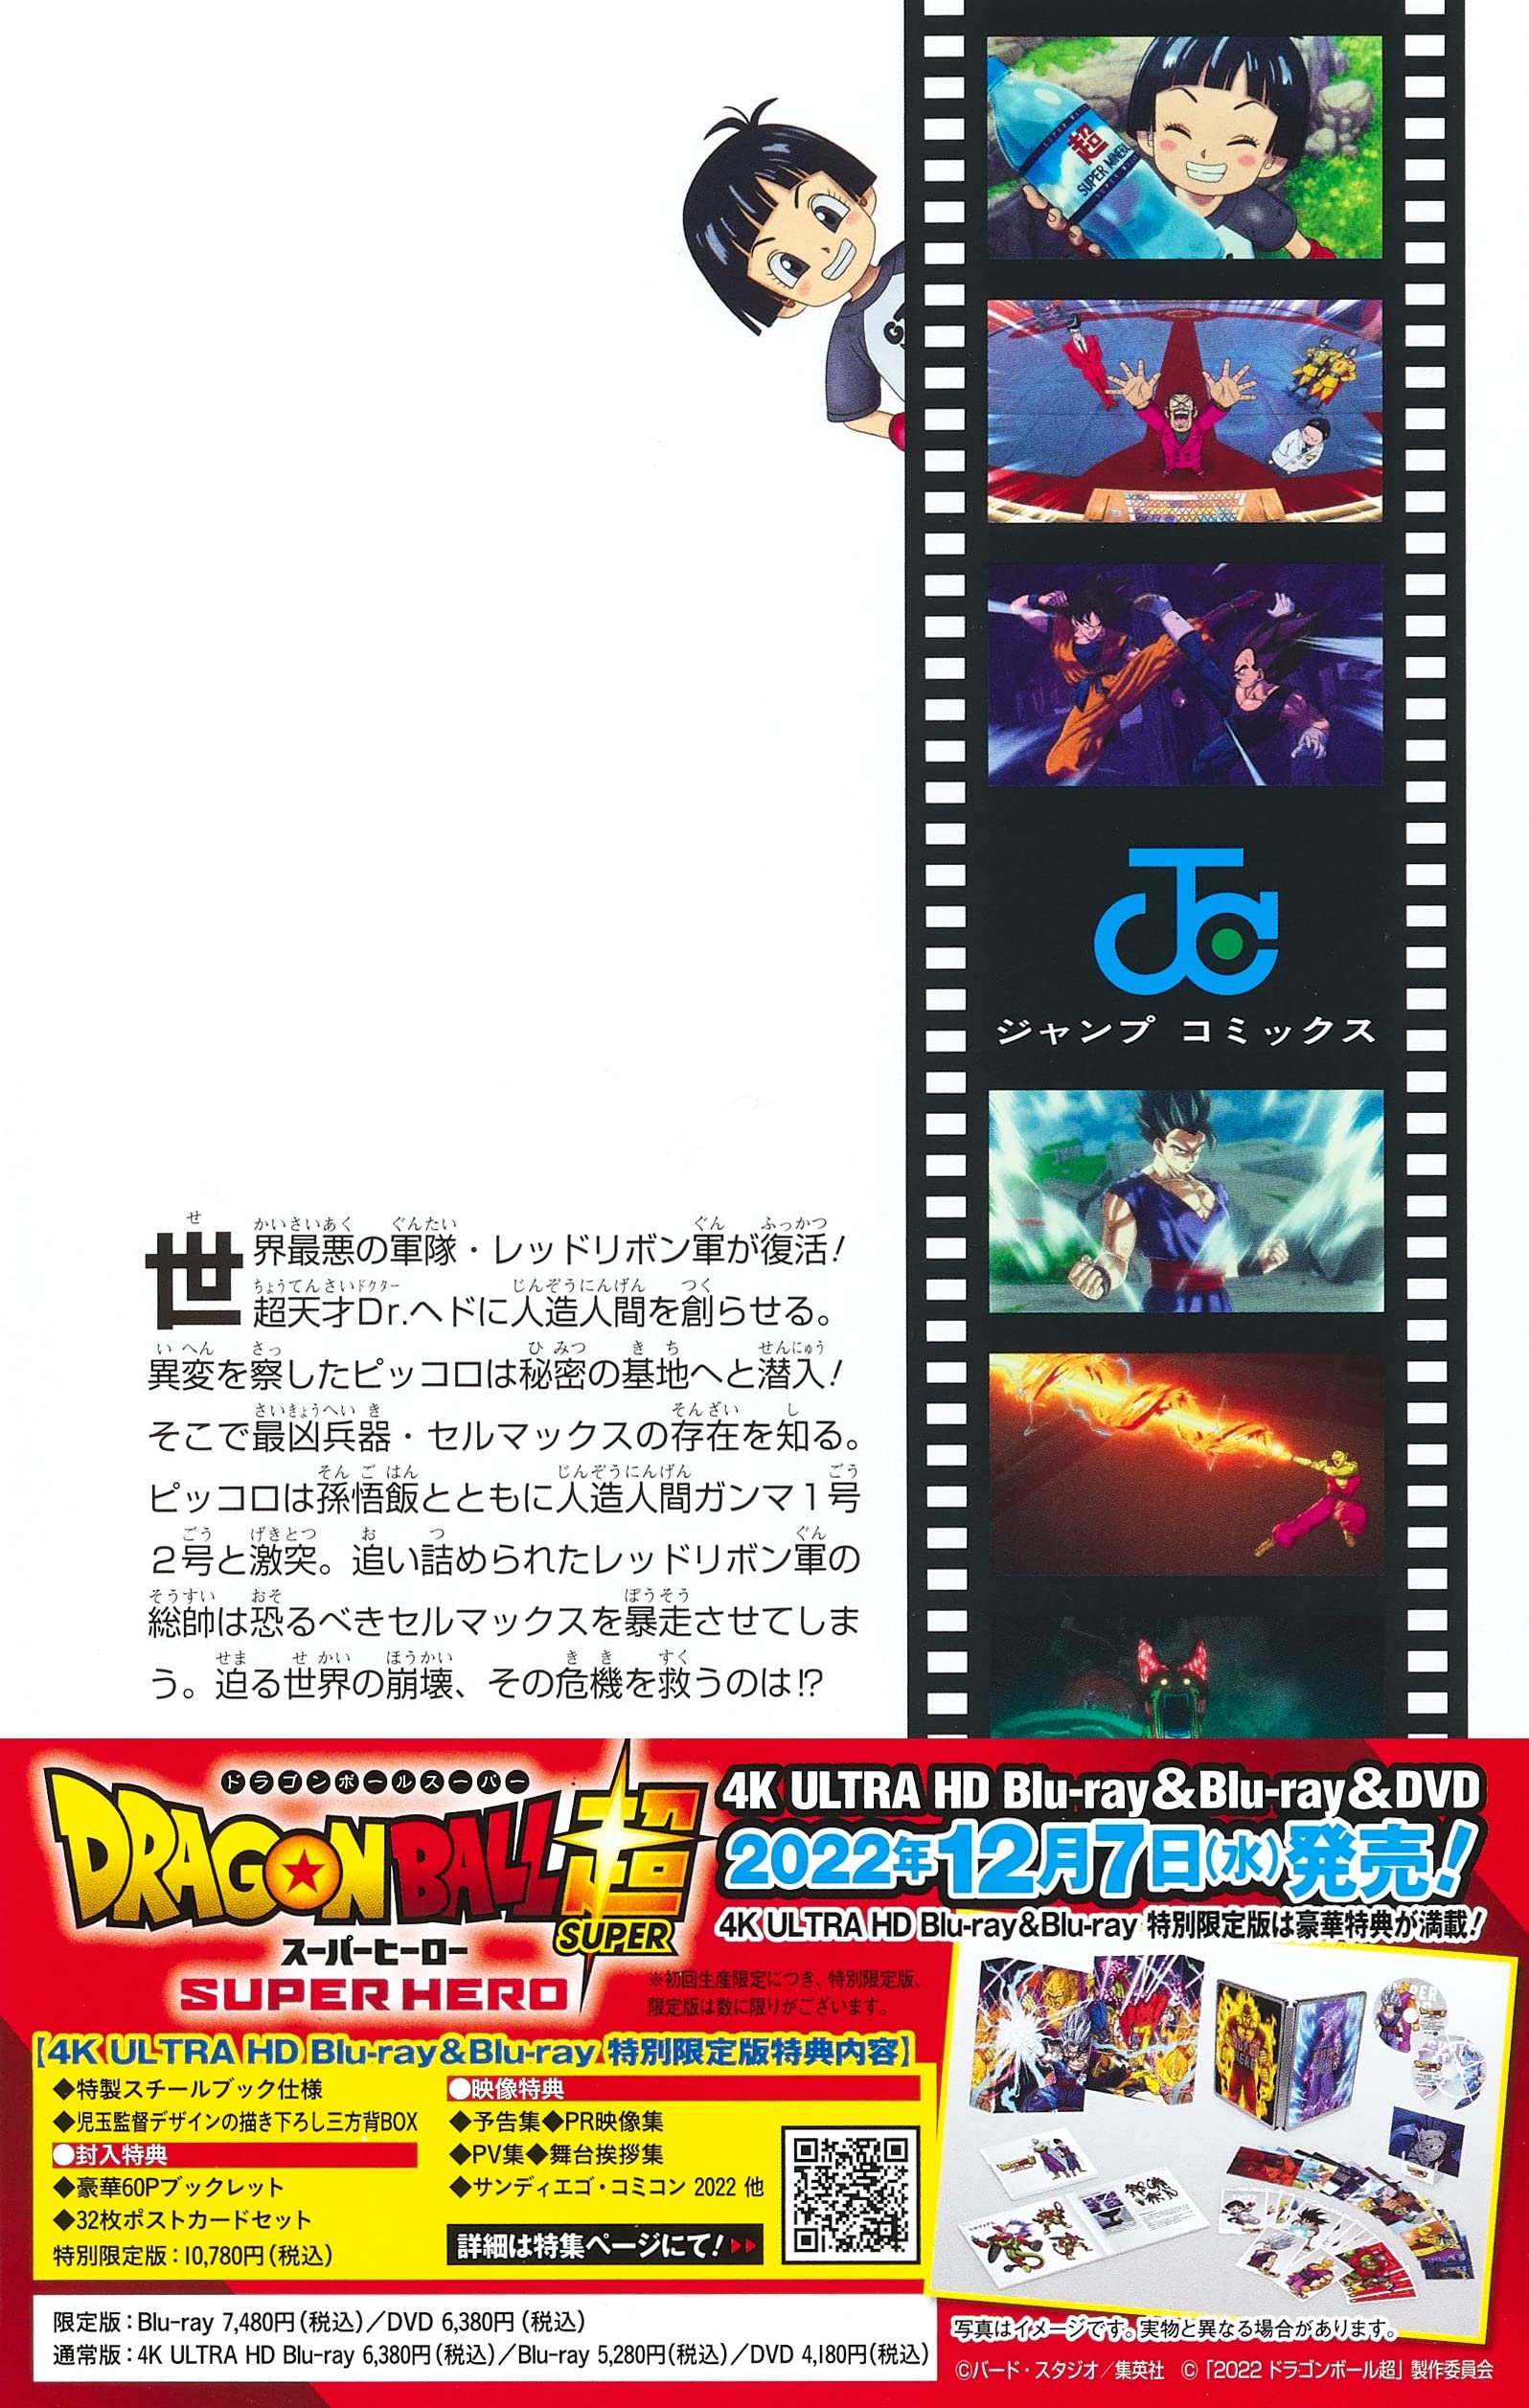 Dragonball Evolution Z Edition (2 Disc- Set DVD & Digital Copy) on DVD Movie